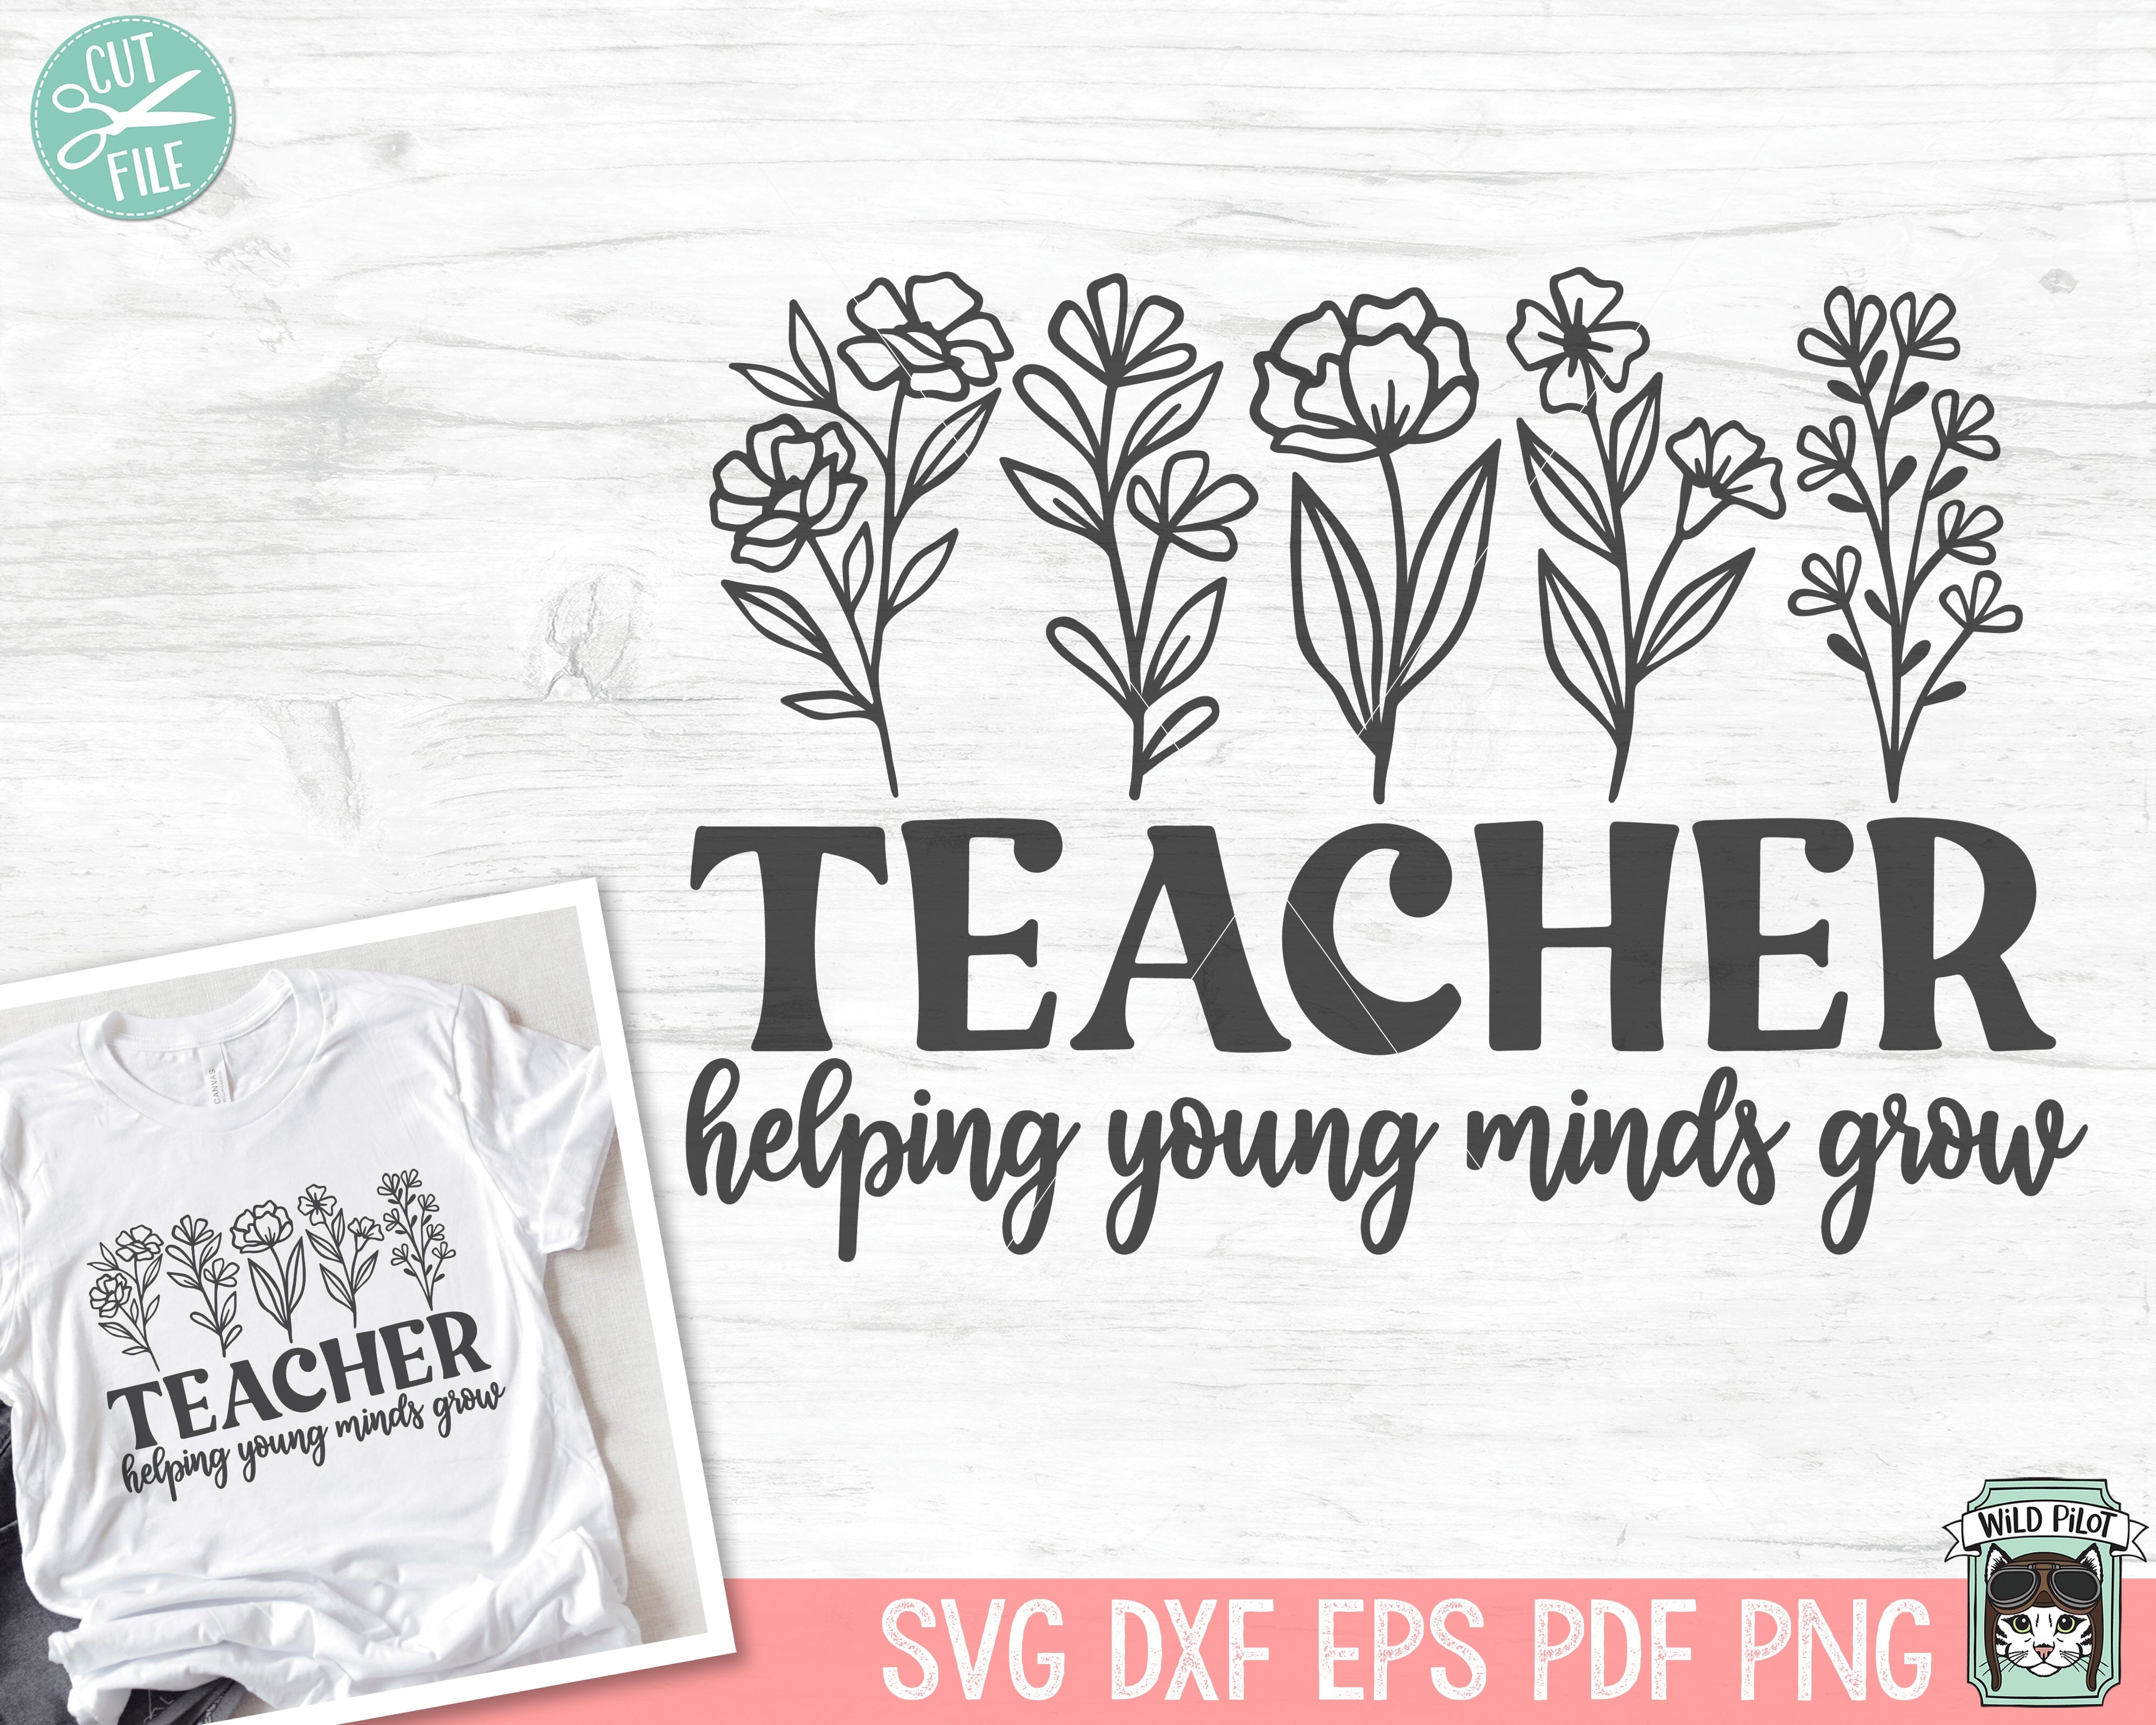 Teach Them to Be Kind SVG, Teacher Life SVG, Teacher Shirt SVG, Gift for  Teacher Svg, Teacher Quote Svg, Png Cut Files Cricut Sublimation 